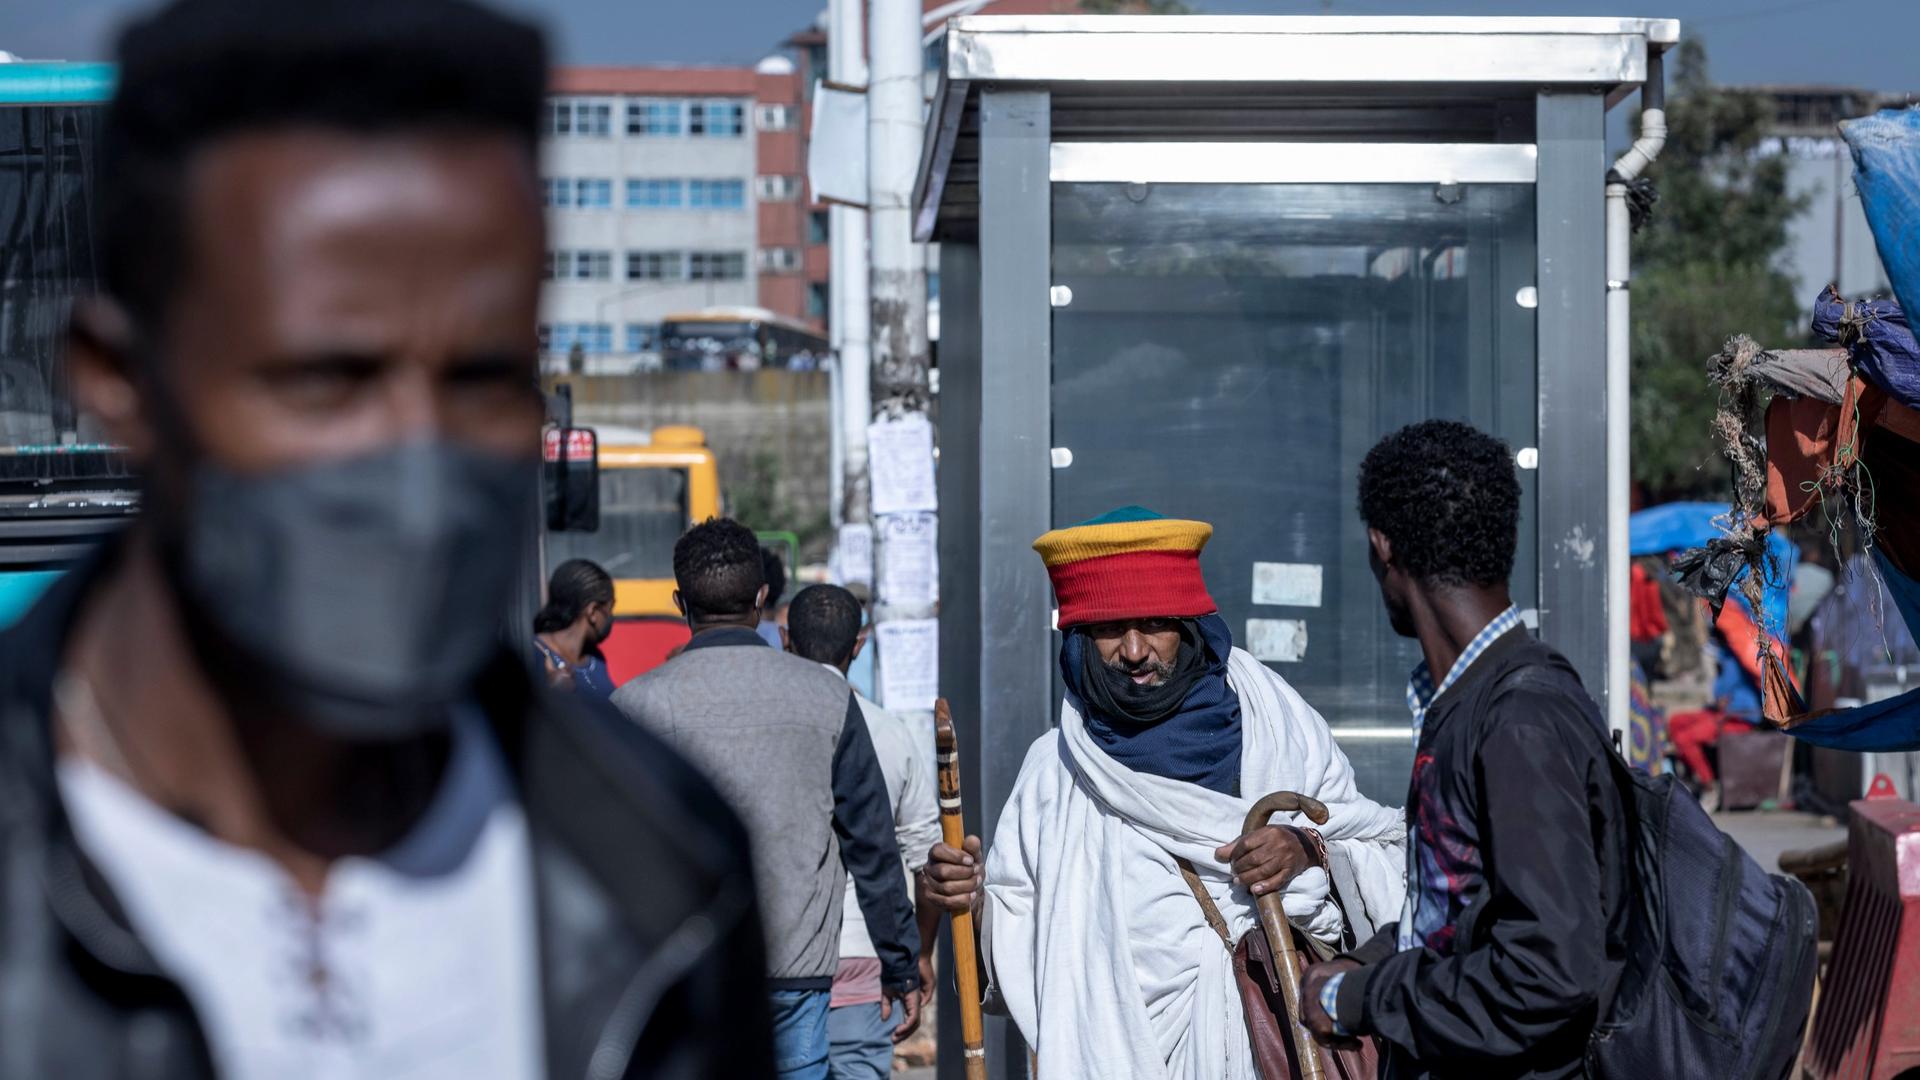 Passengers walk through a bus station in the capital Addis Ababa, Ethiopia, Nov. 6, 2020.